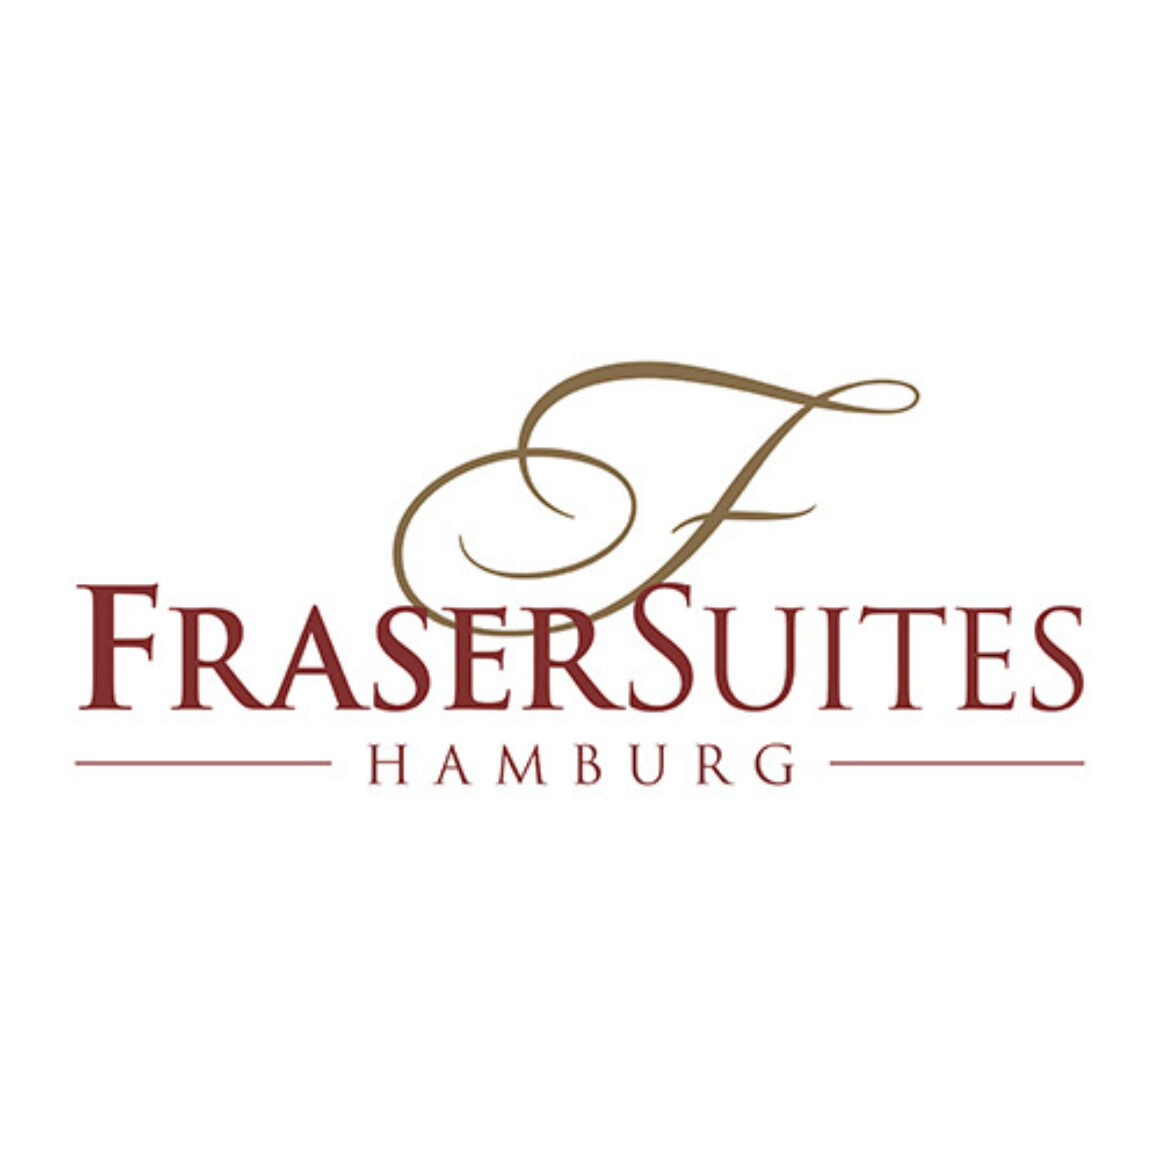 Hotel Fraser Suites Hamburg